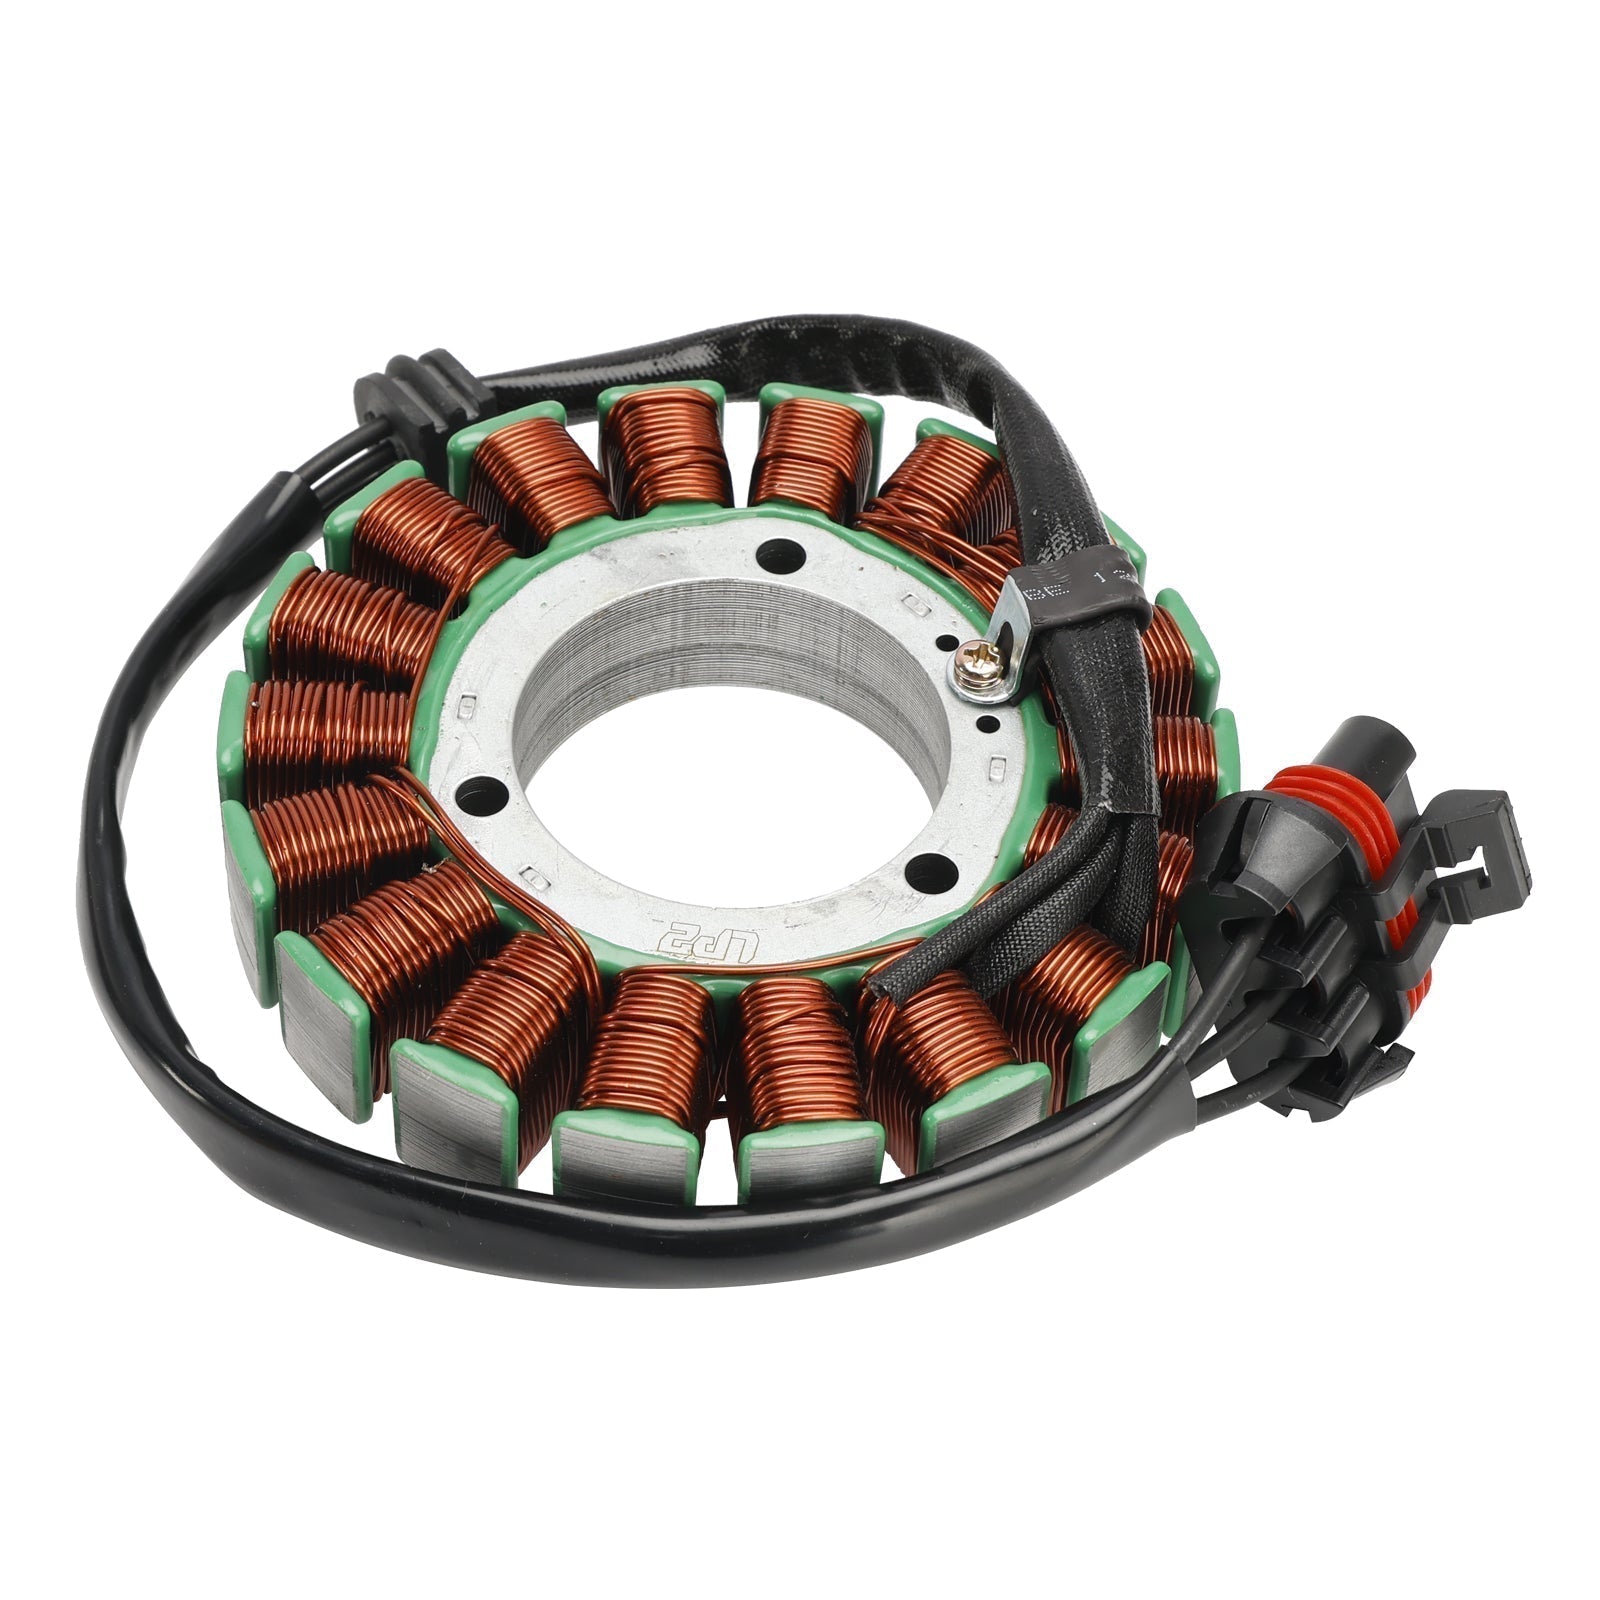 Estator de bobina magnética Polaris RZR Turbo S4 2021 + regulador de voltaje + conjunto de juntas 1000-4013970-4013970